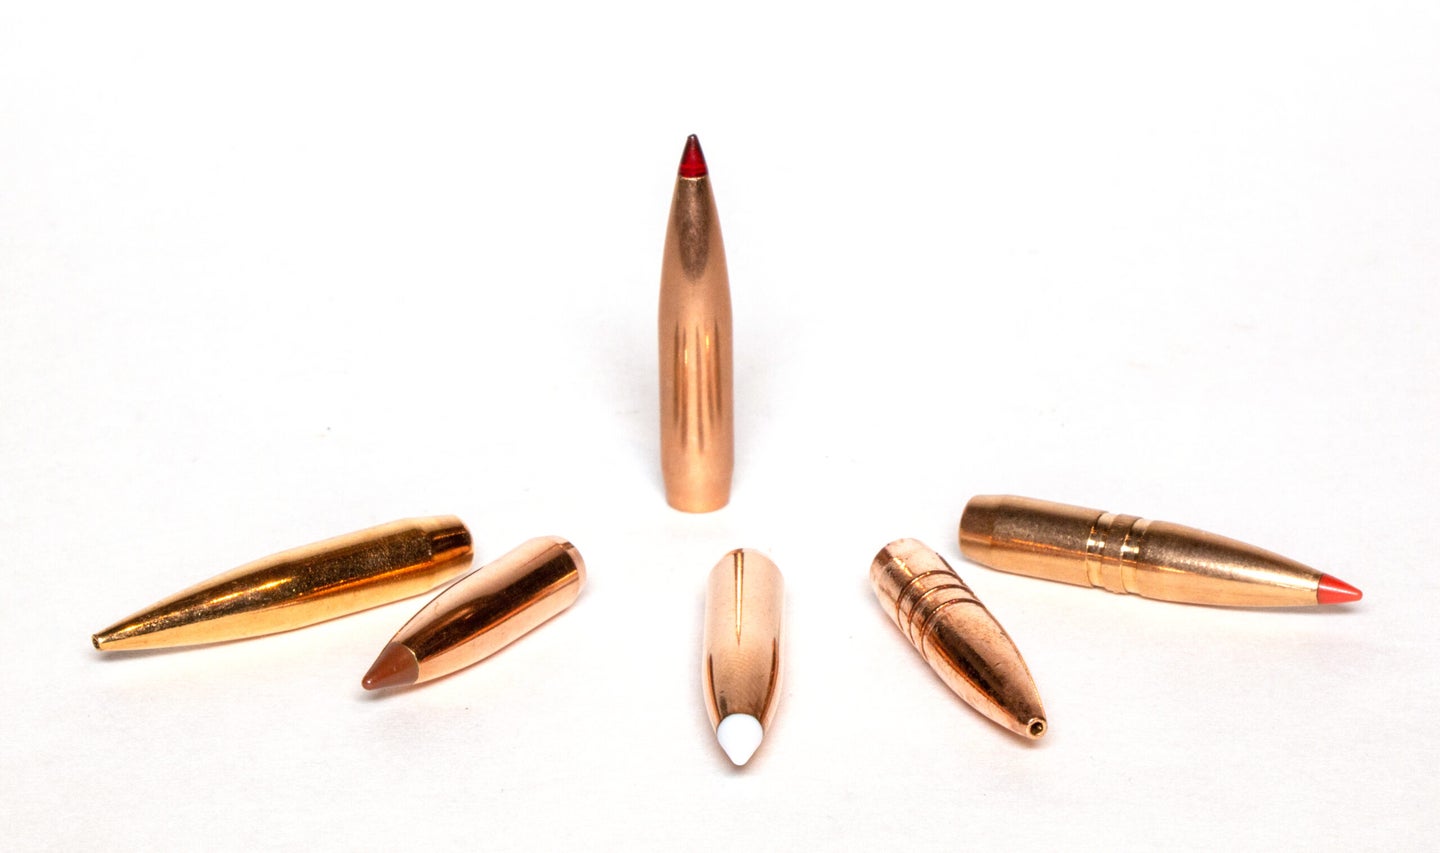 6.5mm bullets